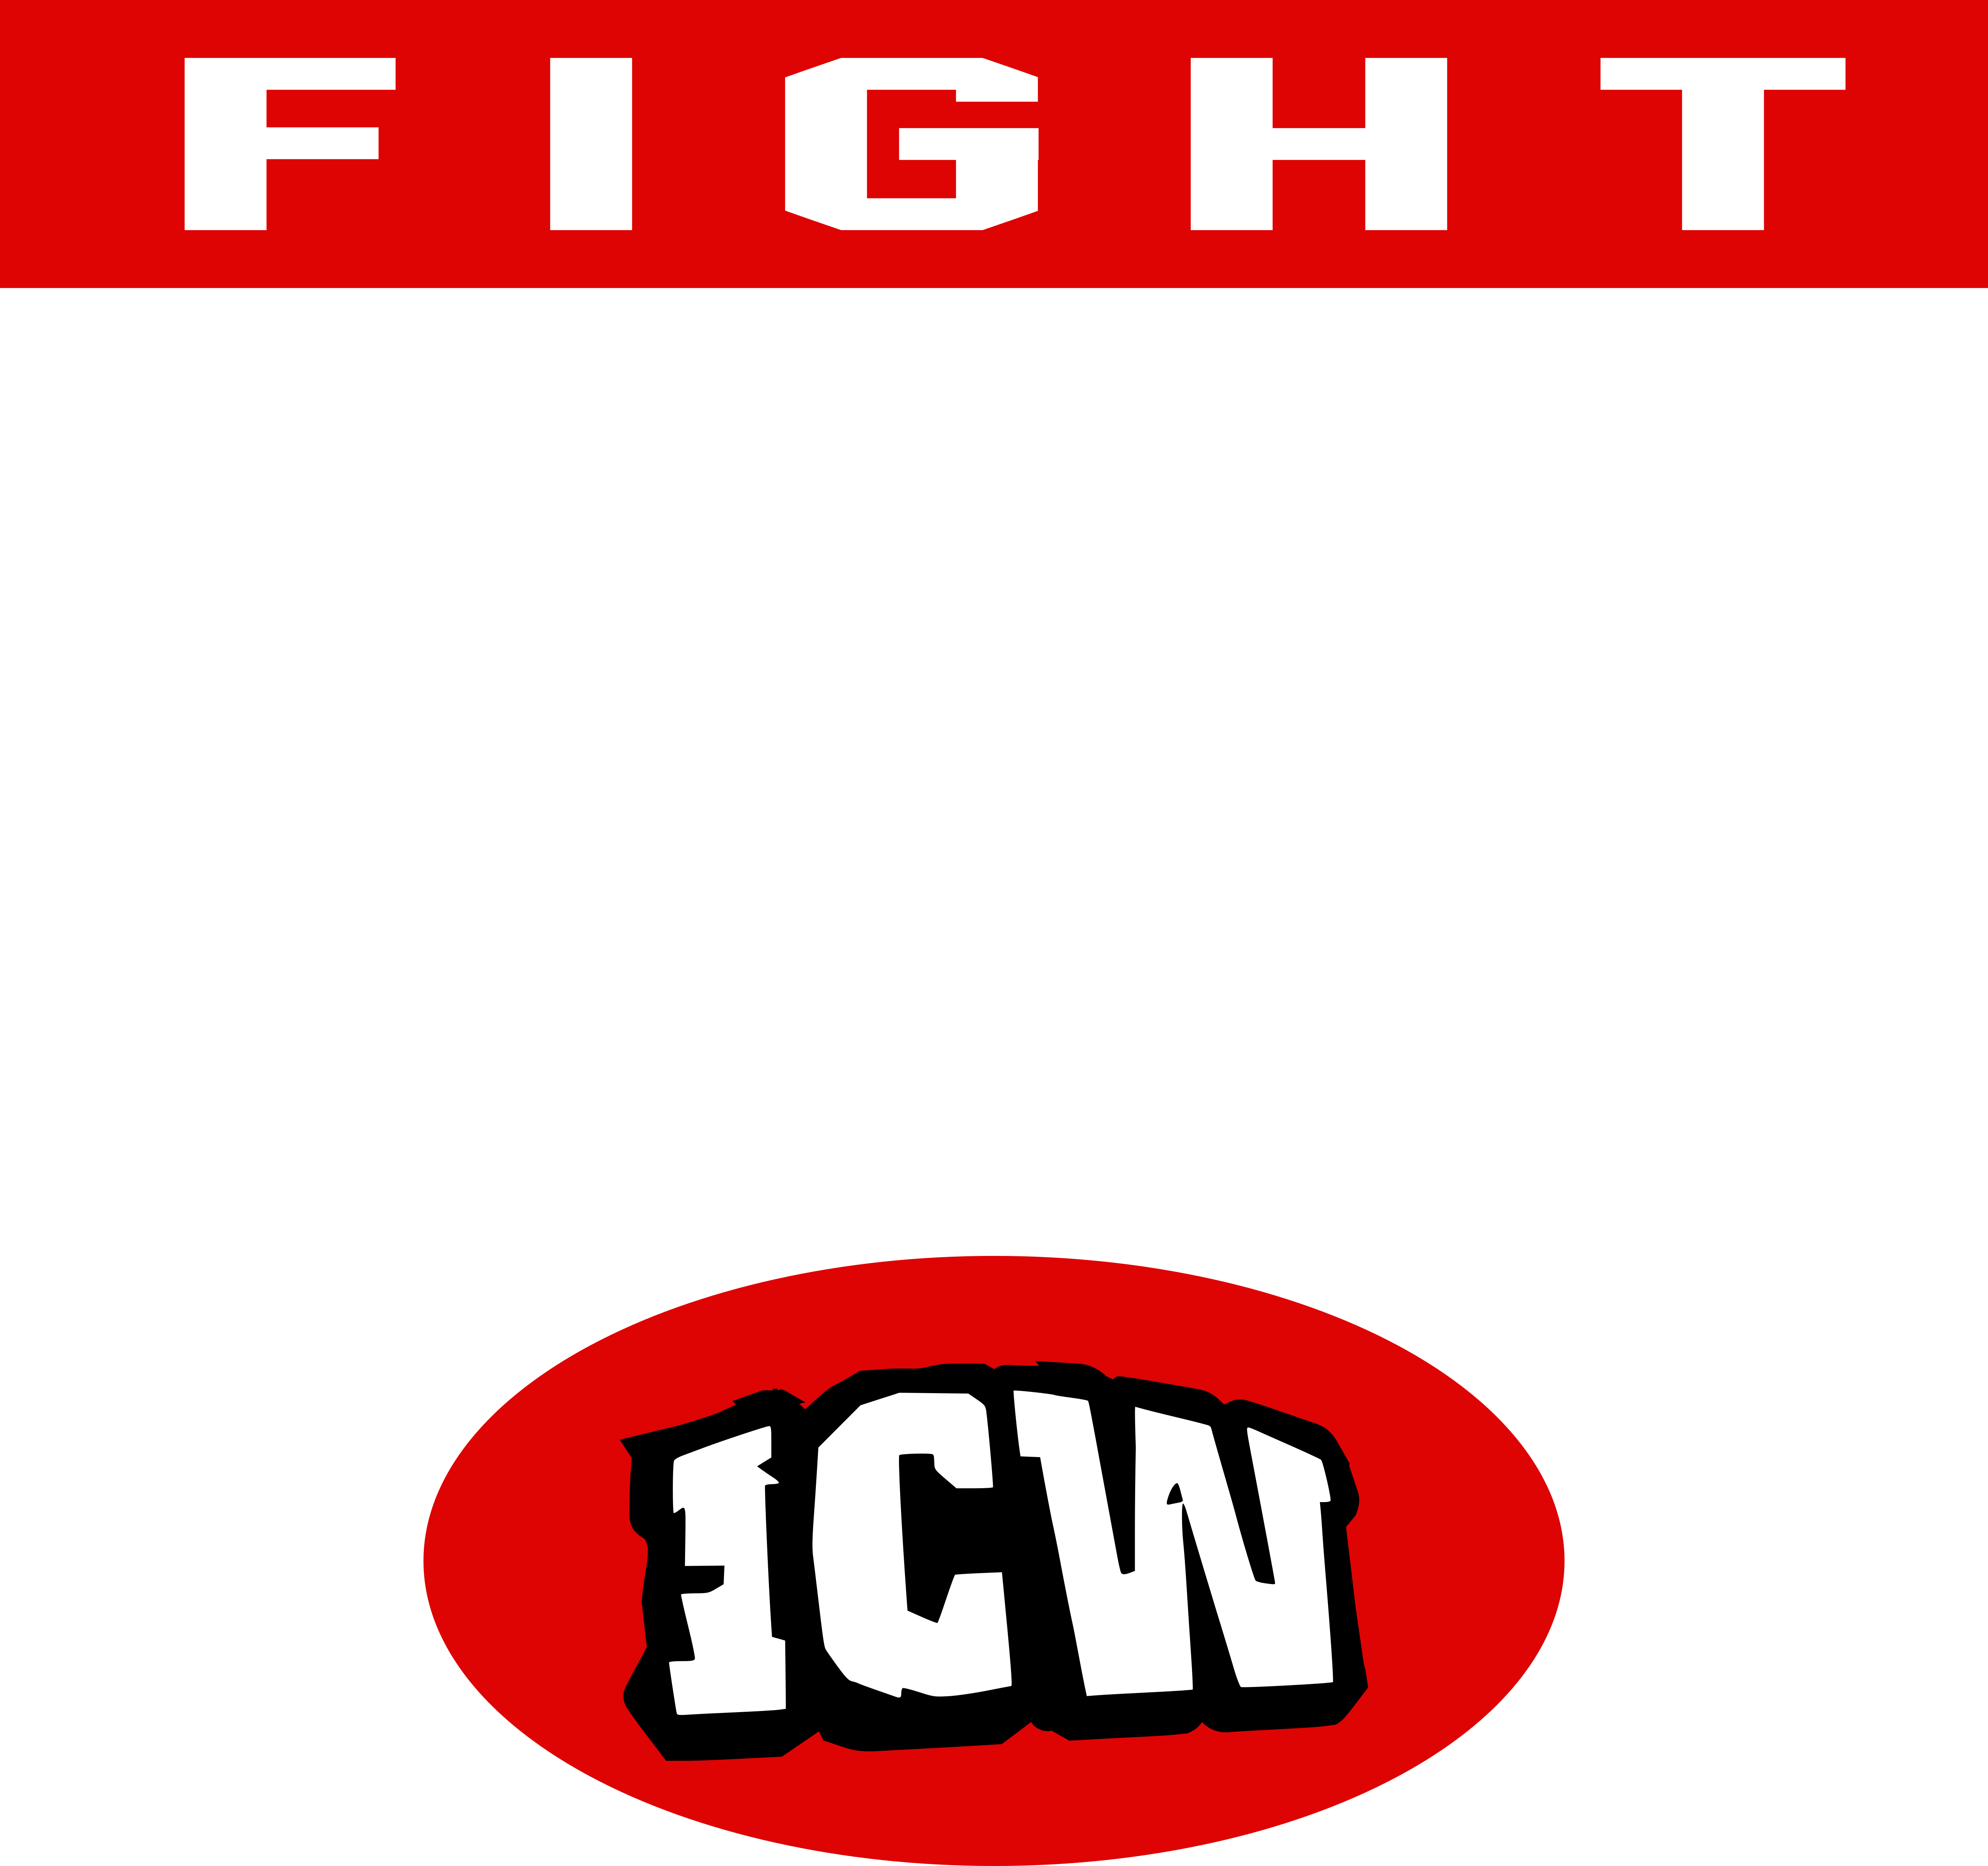 ICW Fight Club Logo by DarkVoidPictures on DeviantArt